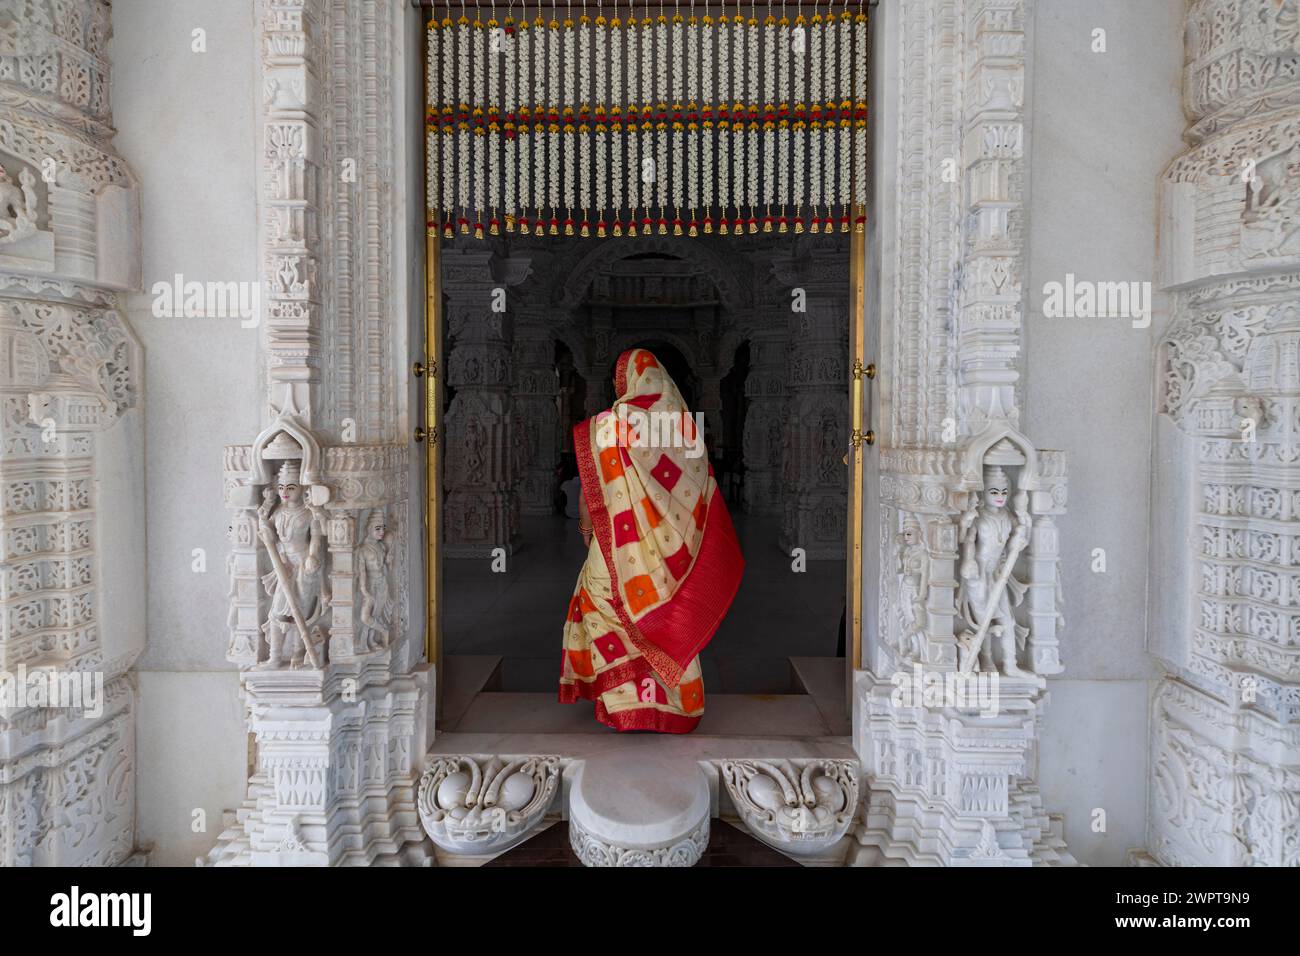 Tempio di Dharamshala Manilaxmi Tirth Jain costruito in marmo, Gujarat, India Foto Stock